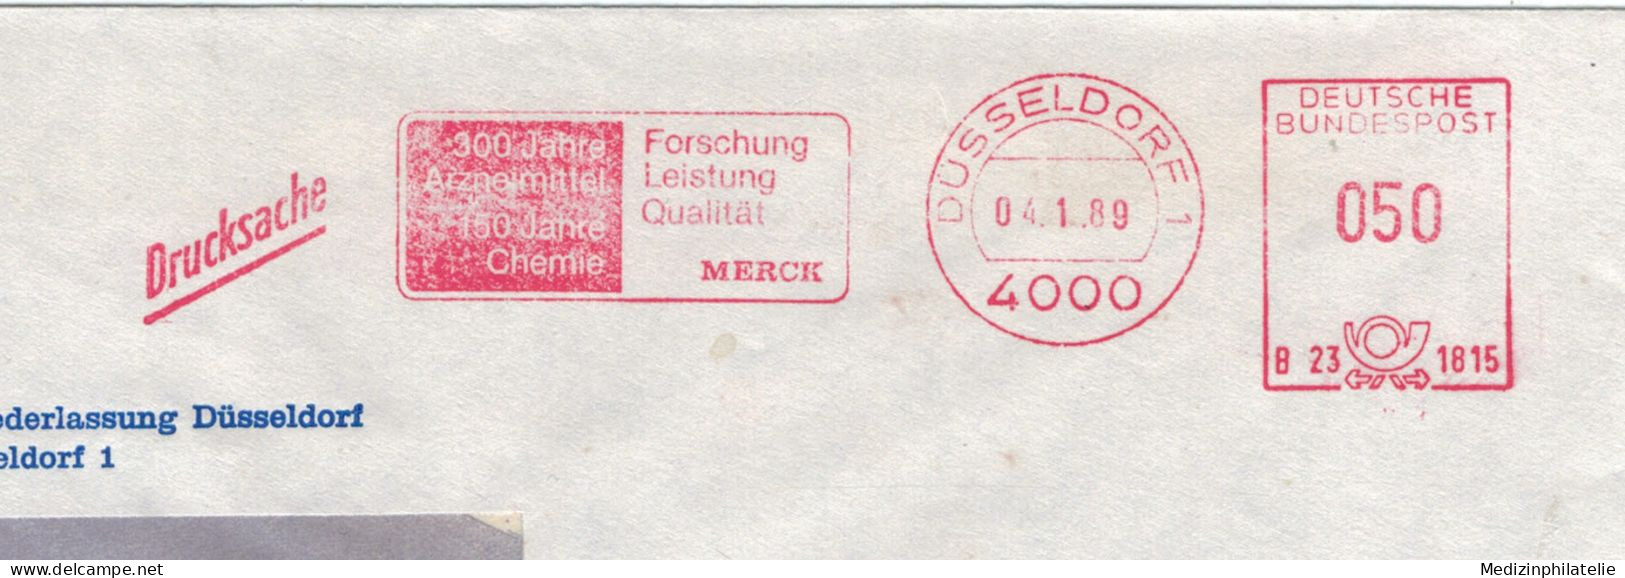 4000 Düsseldorf - Merck Forschung Leistung Qualität - Arzneimittel Chemie 1989 - Apotheek